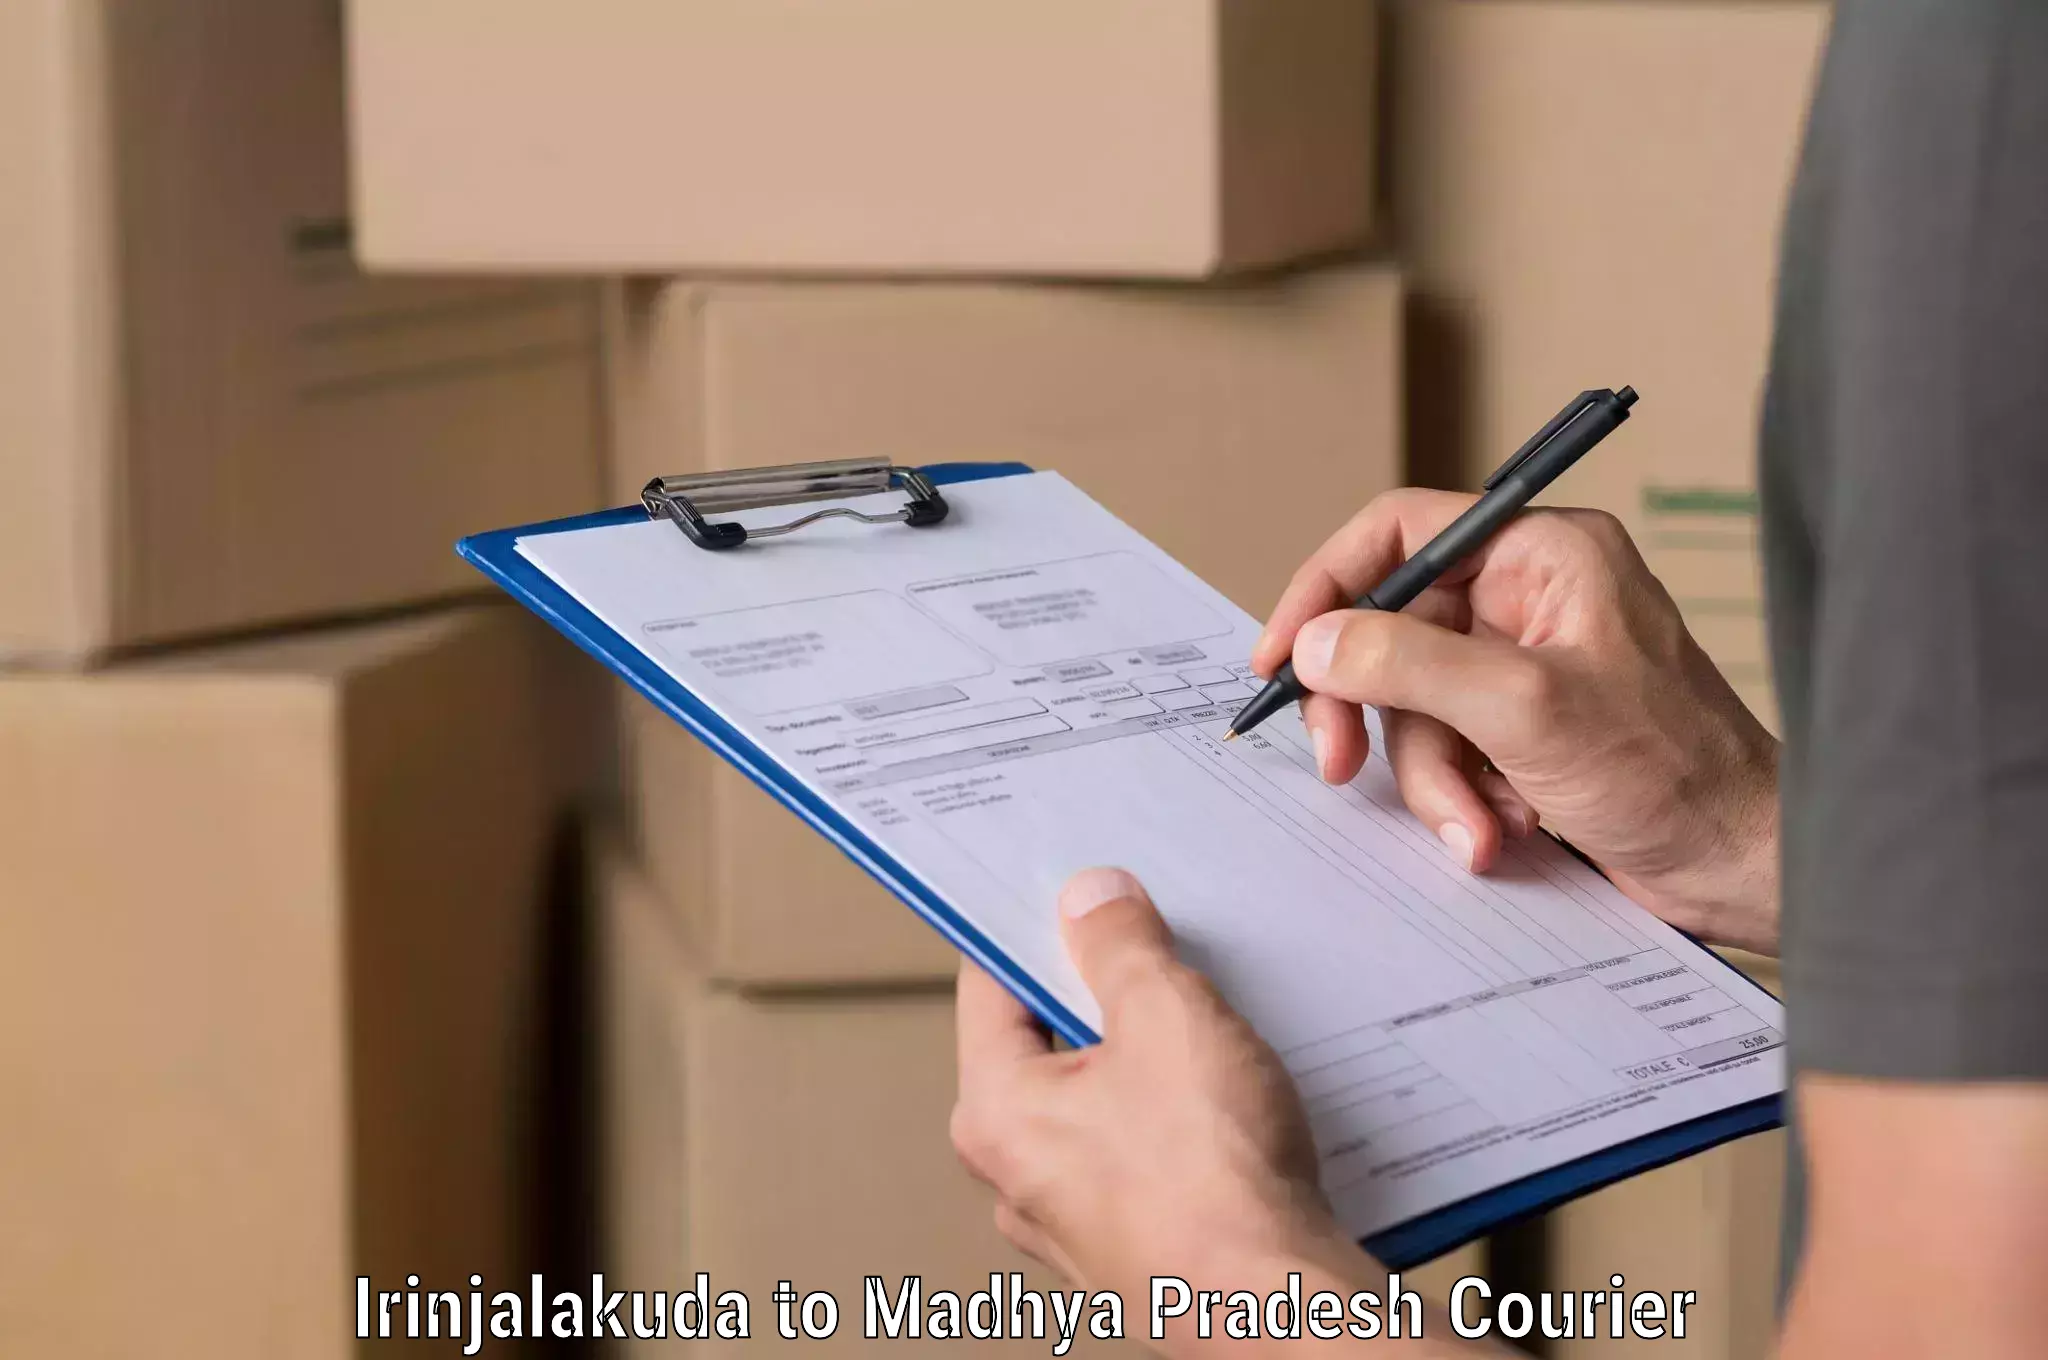 24-hour courier service in Irinjalakuda to Petlawad